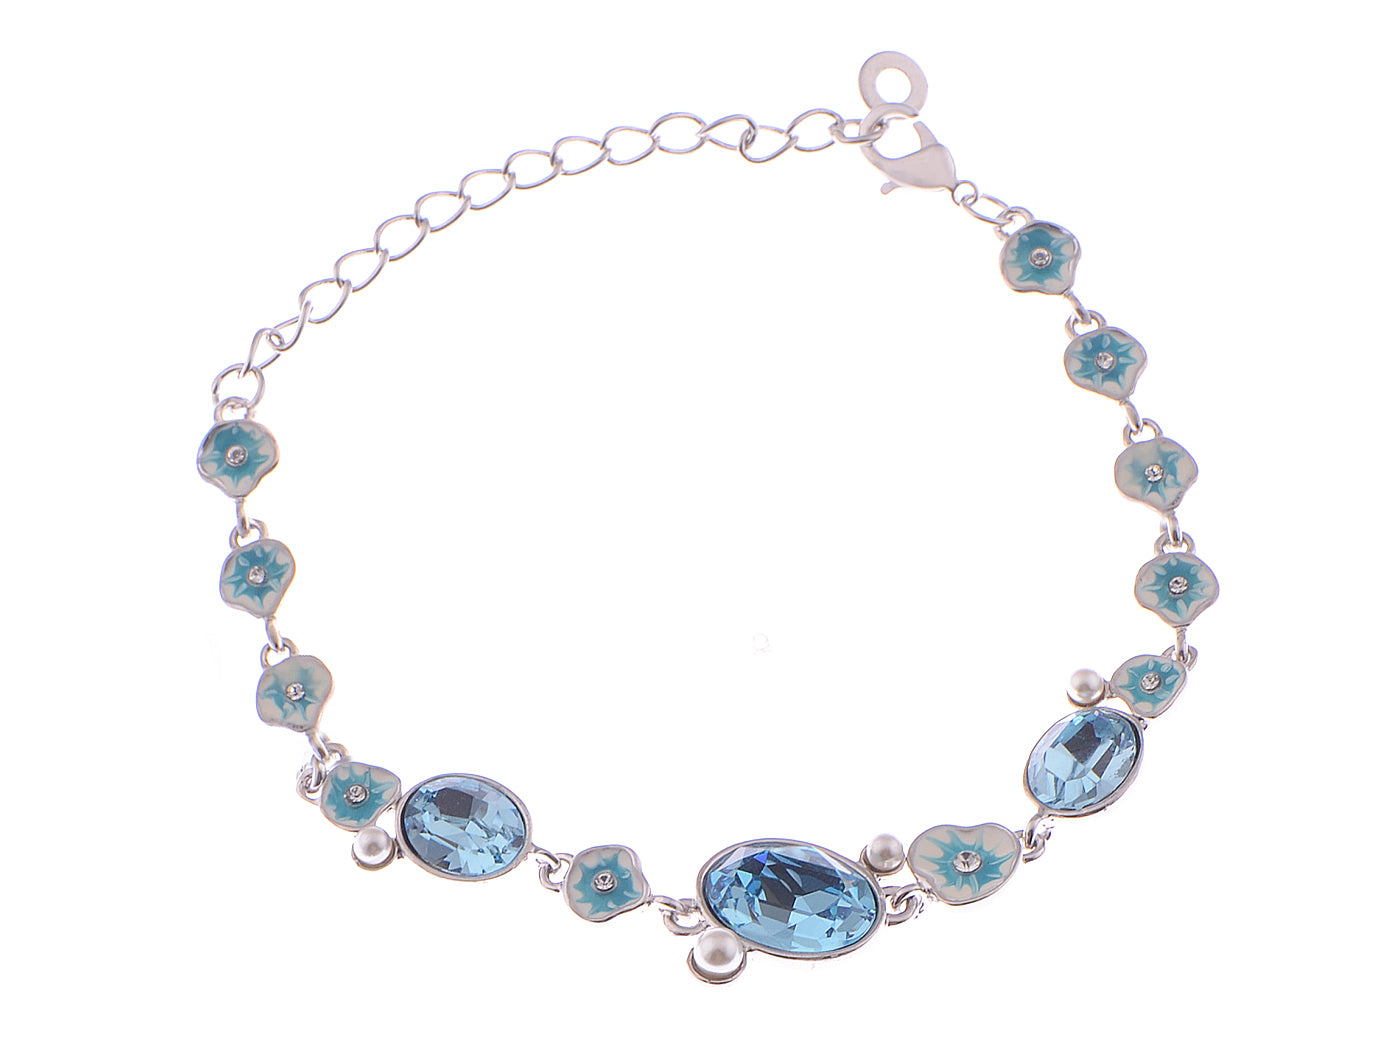 Swarovski Crystal Silver Blue Geometric Pearl Bracelet